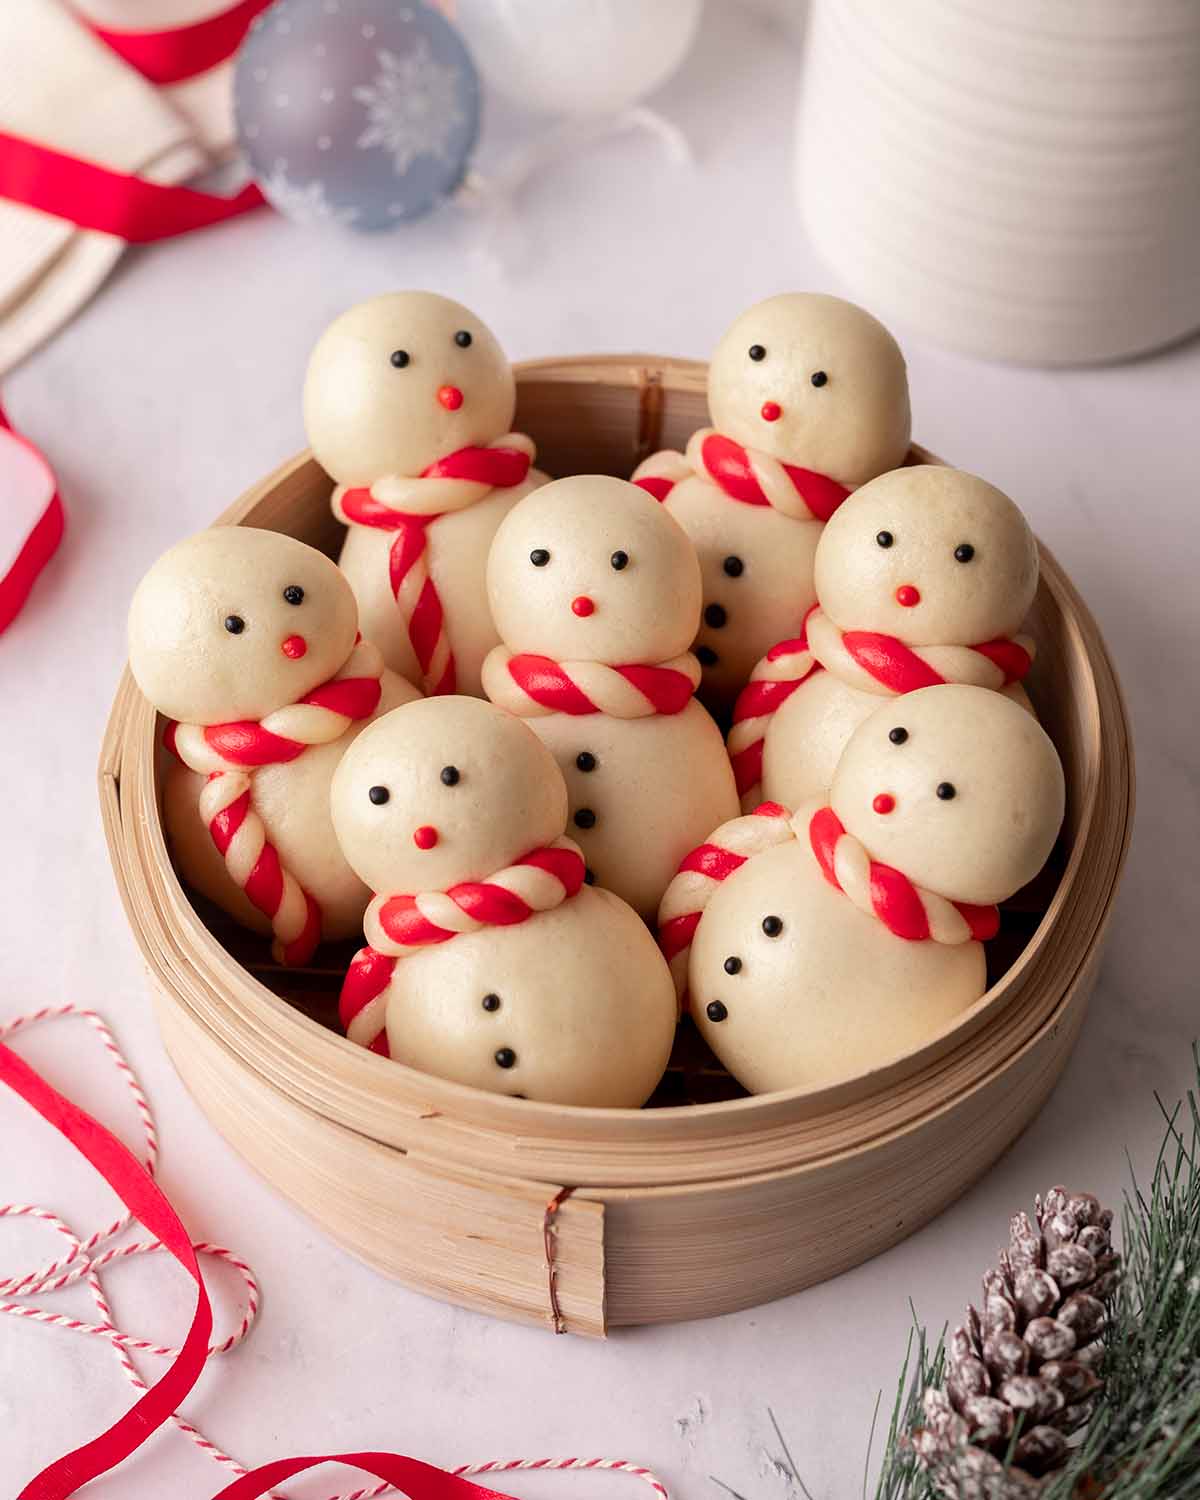 Seven steamed snowmen buns upright in a bamboo steamer.